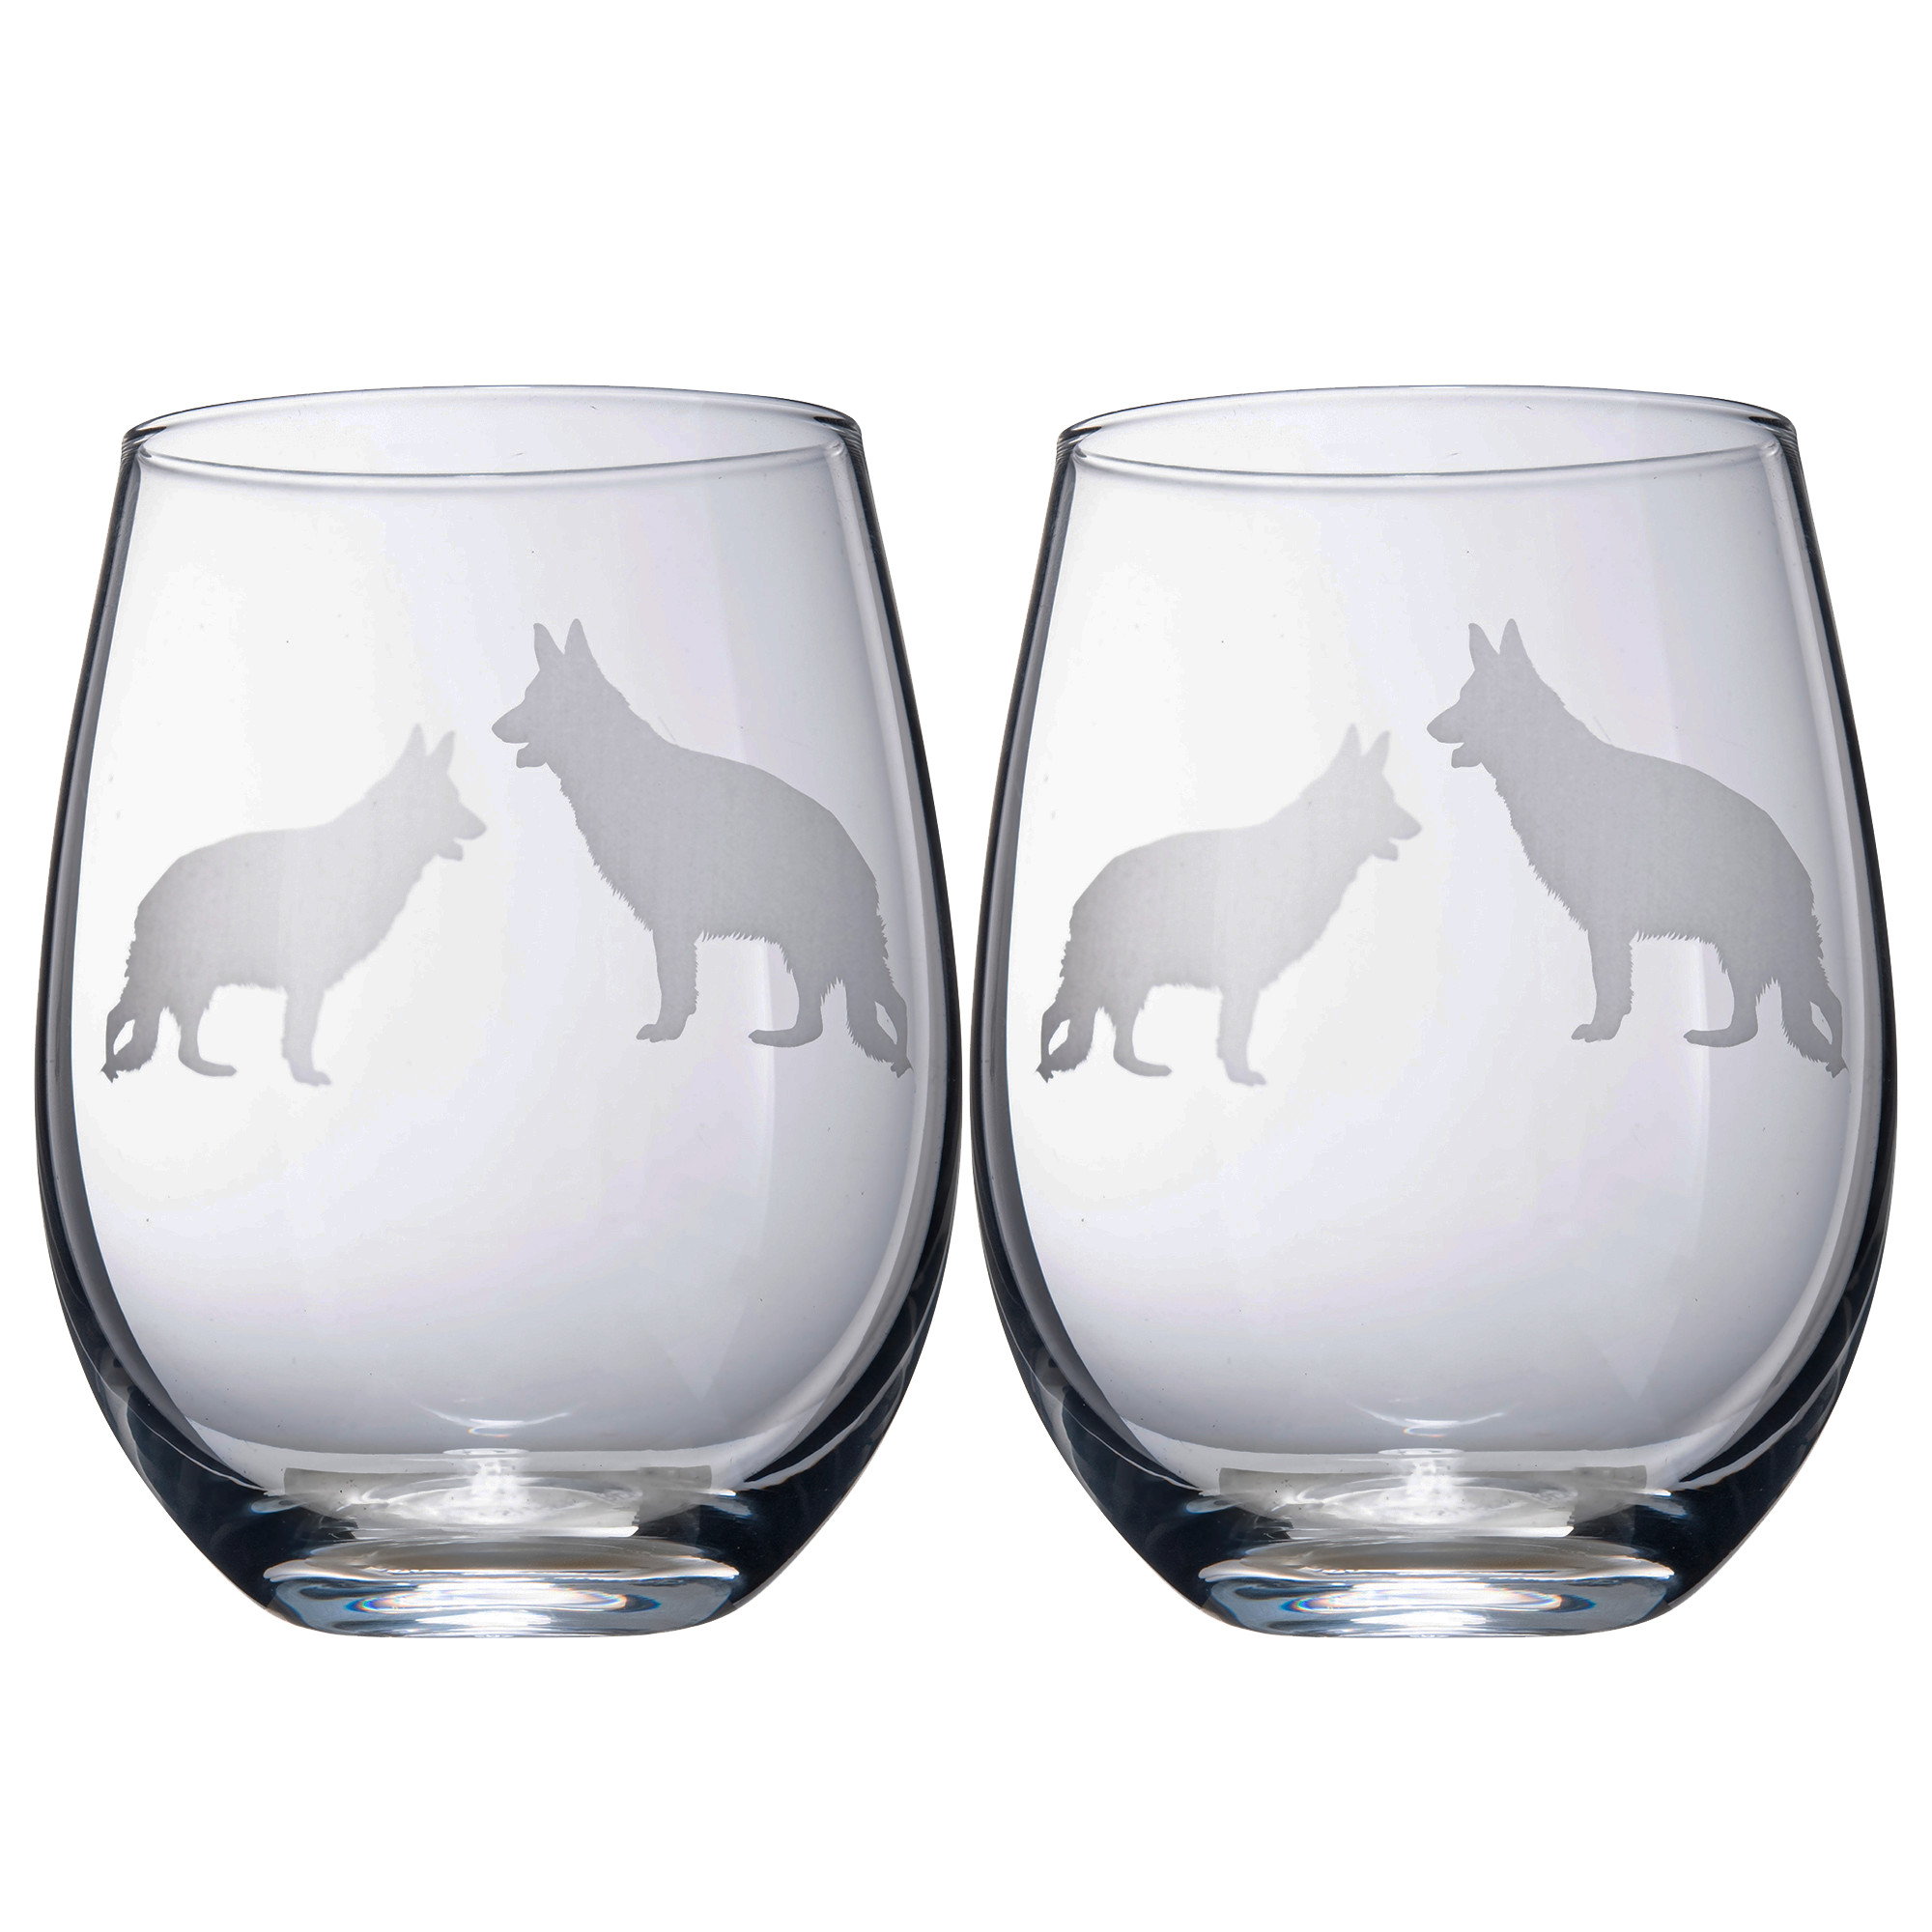 German Shepherd 16 Oz Ice Coffee Glasses Can Shaped Glass Cups